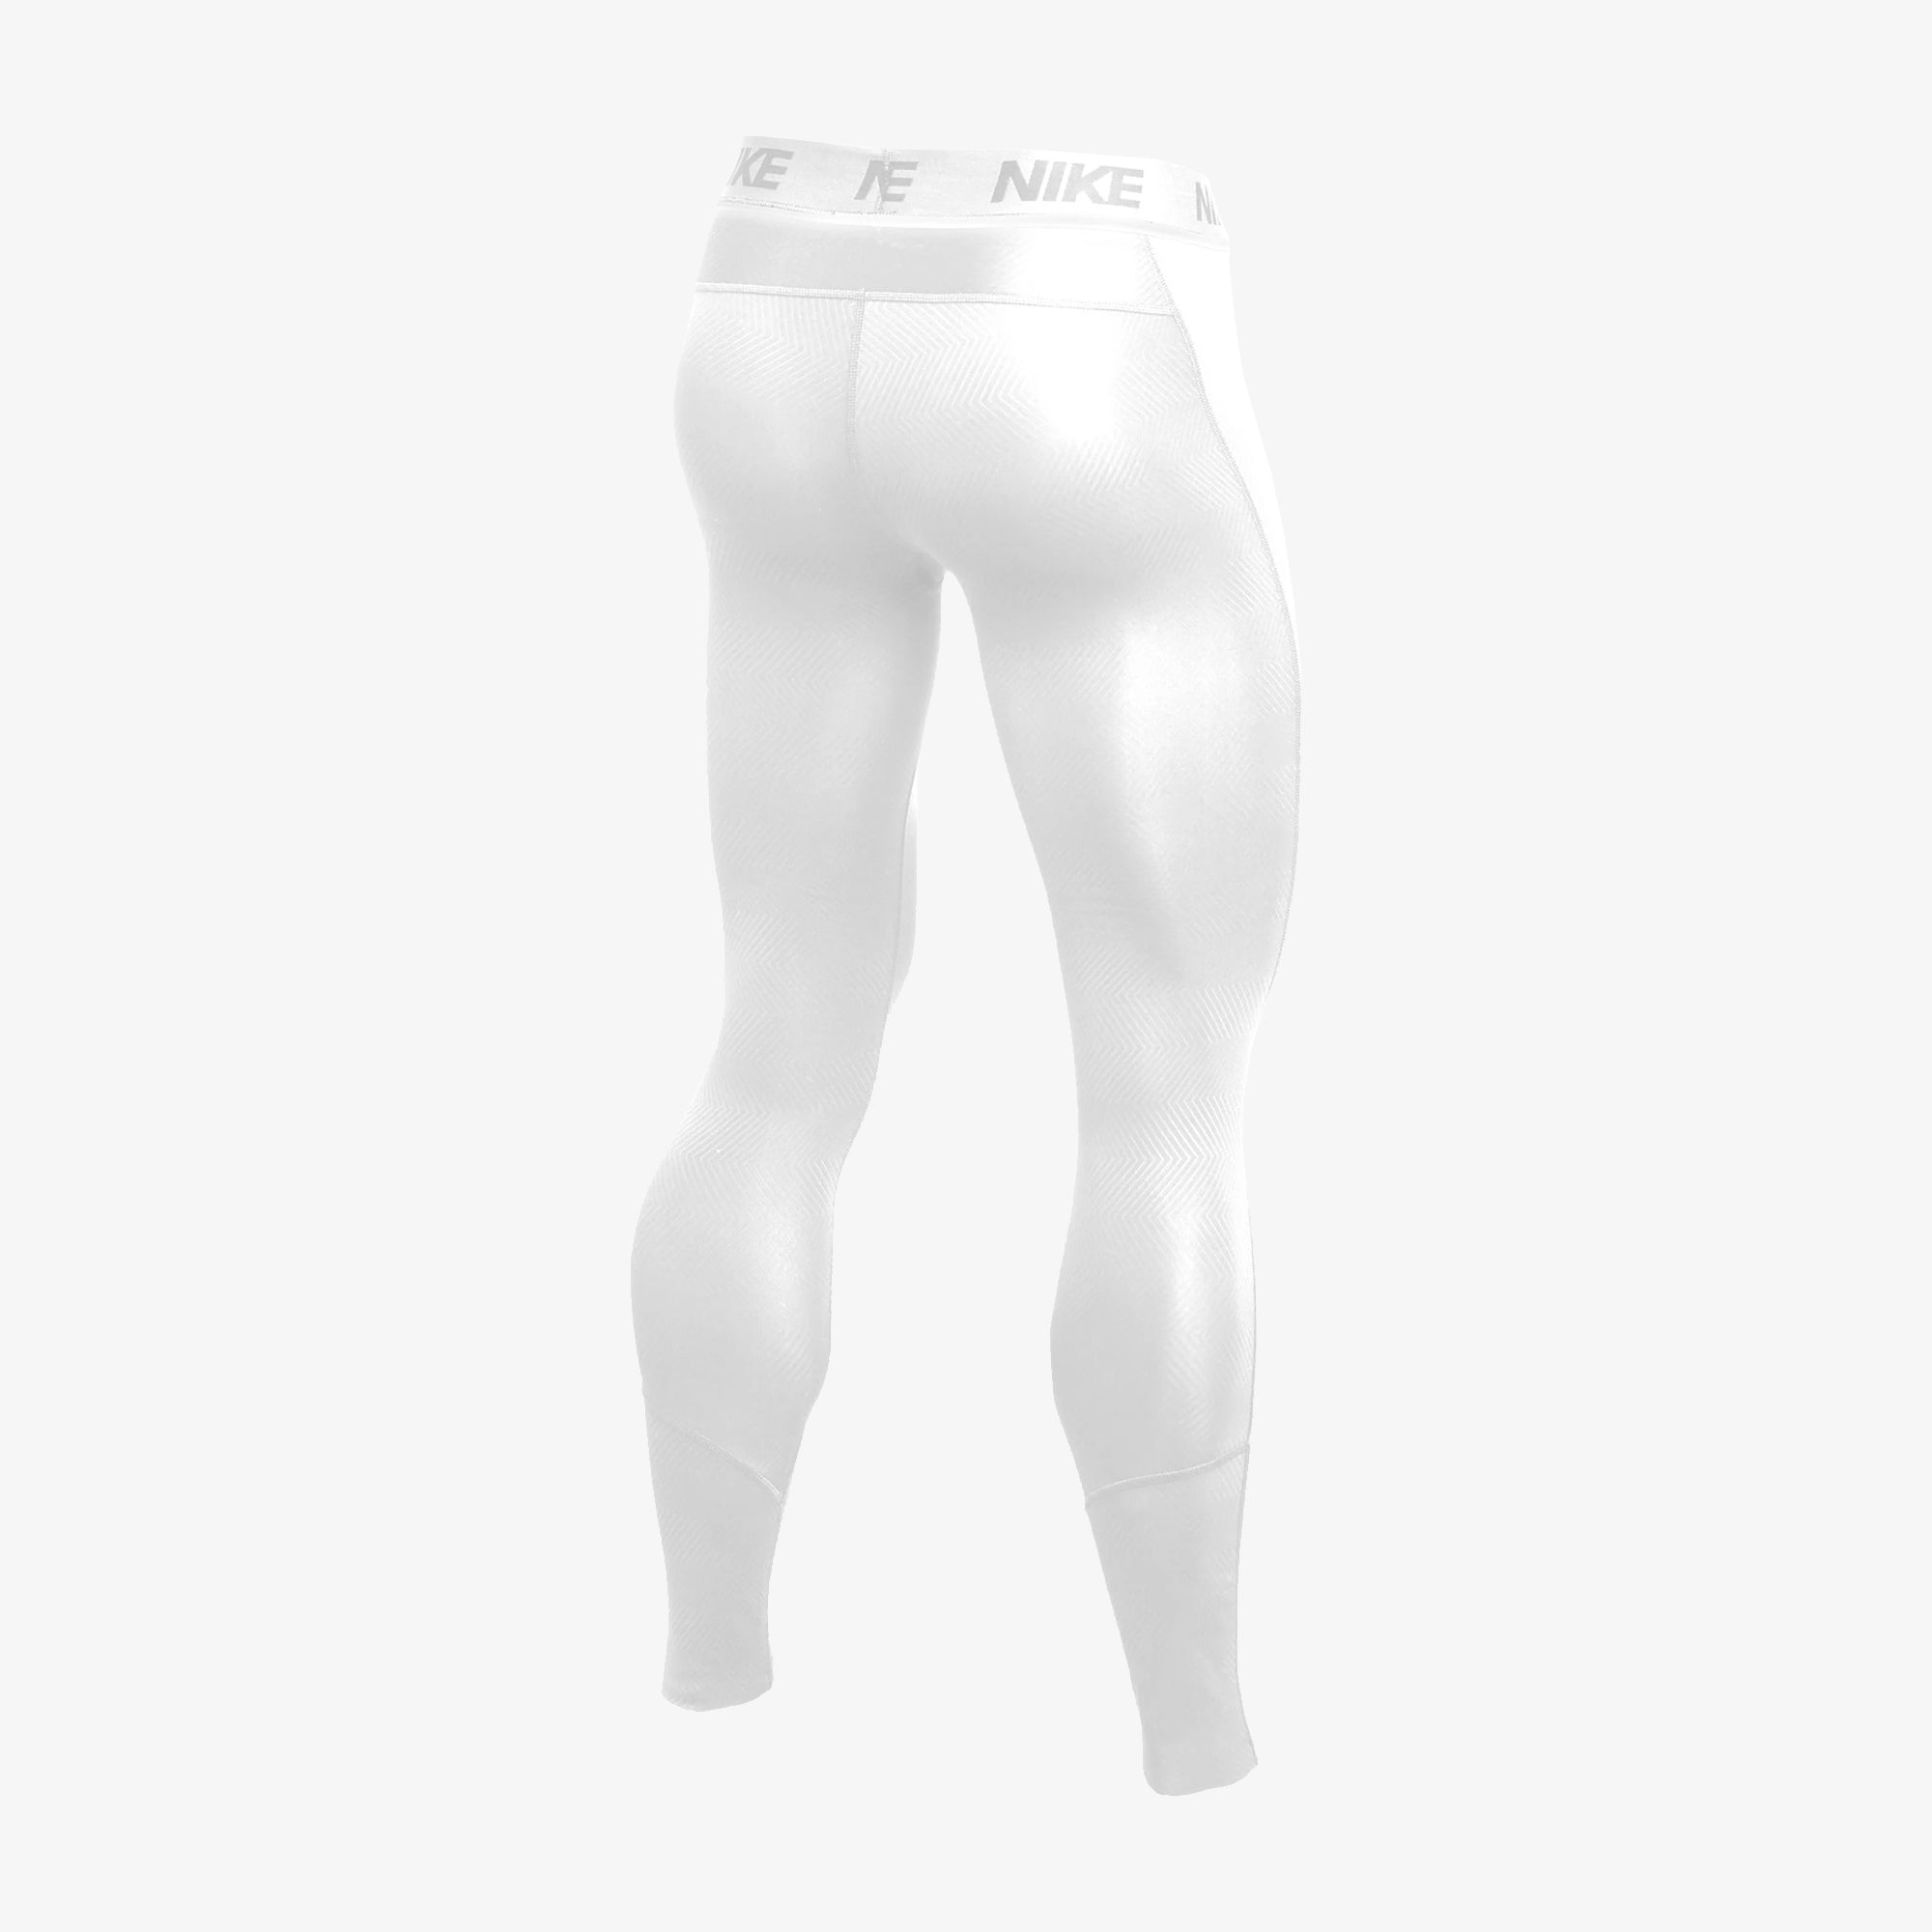 NWT $55 Nike Thermal Dri-Fit Compression Tights Pants 748868-100 White 2XL  XXL